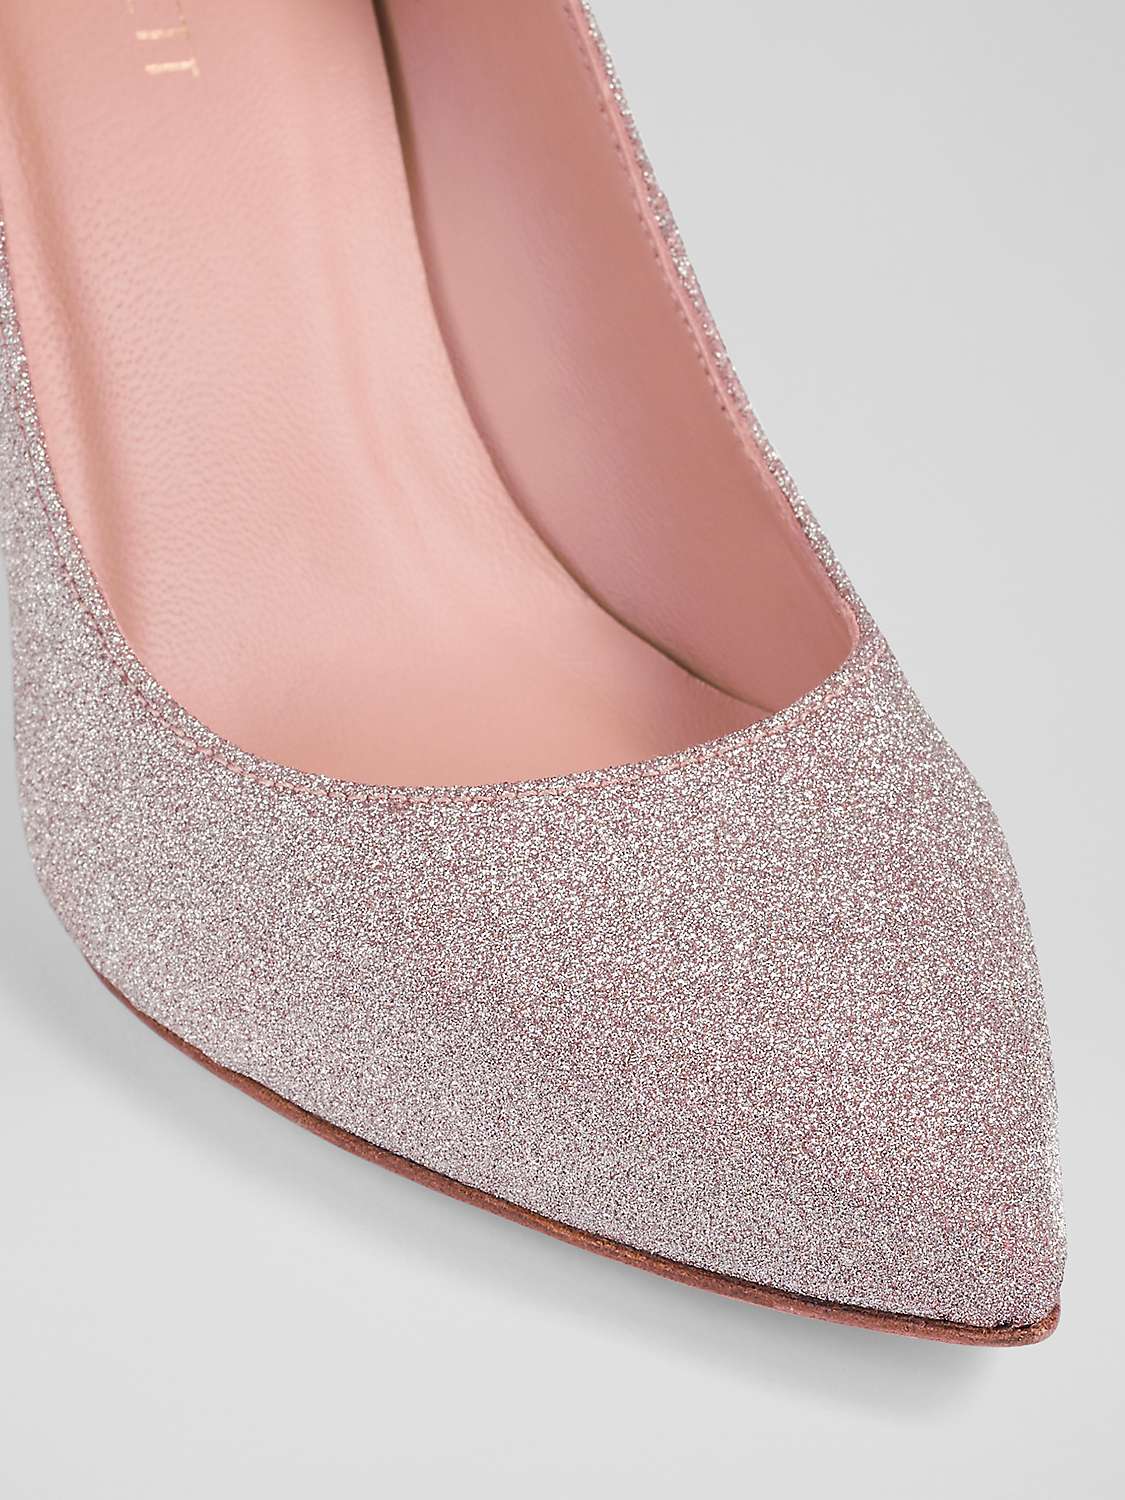 Buy L.K.Bennett Floret Glitter Stiletto Heel Court Shoes Online at johnlewis.com